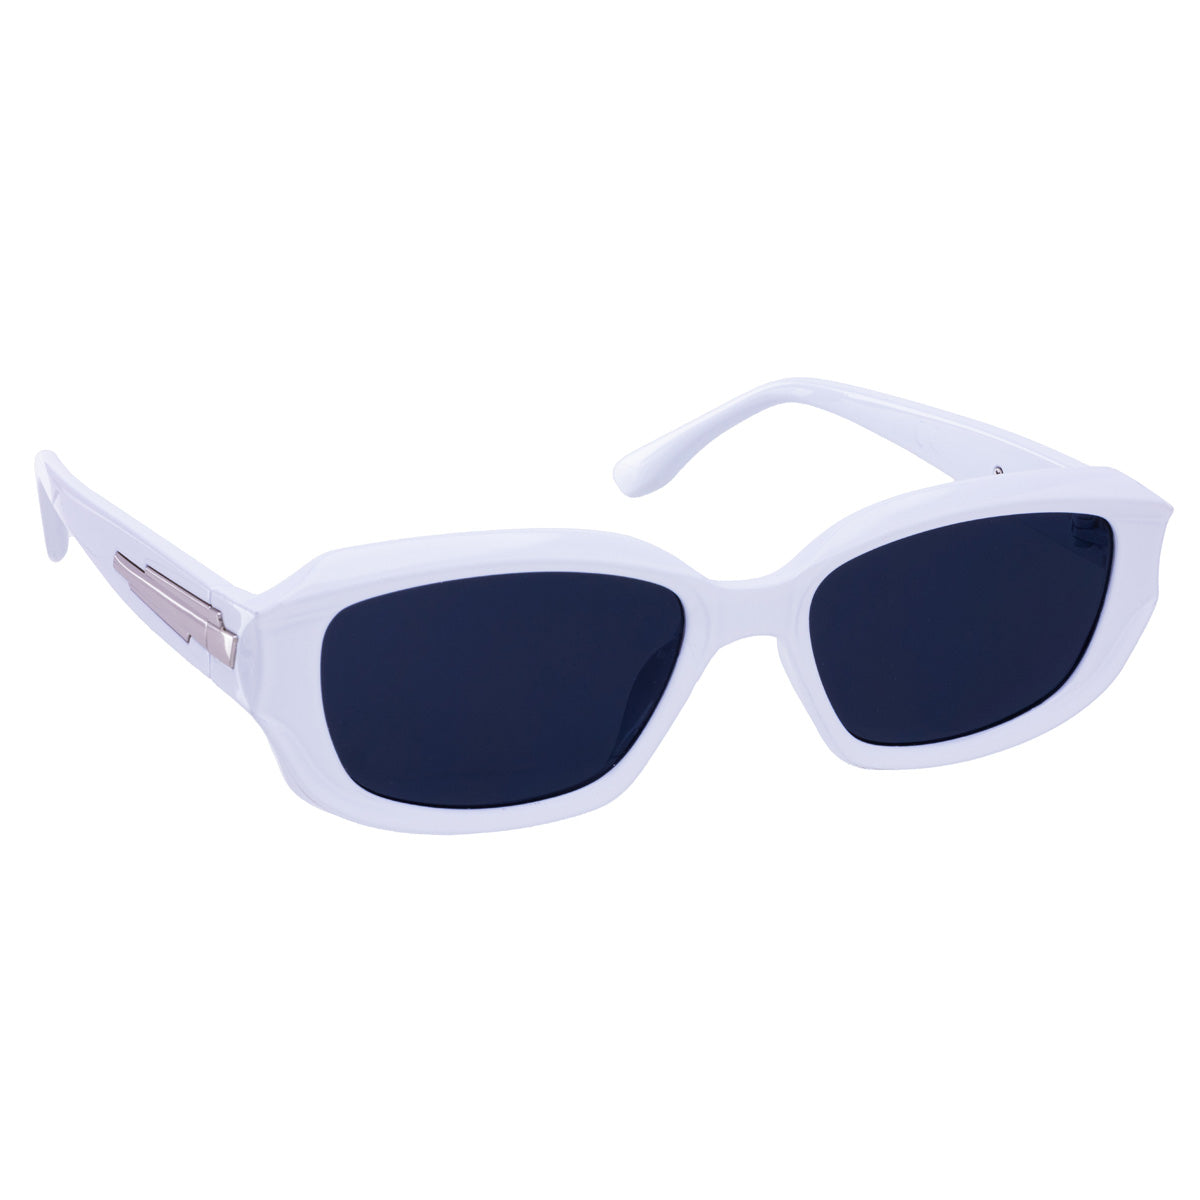 Rectangular sunglasses with bevelled corners